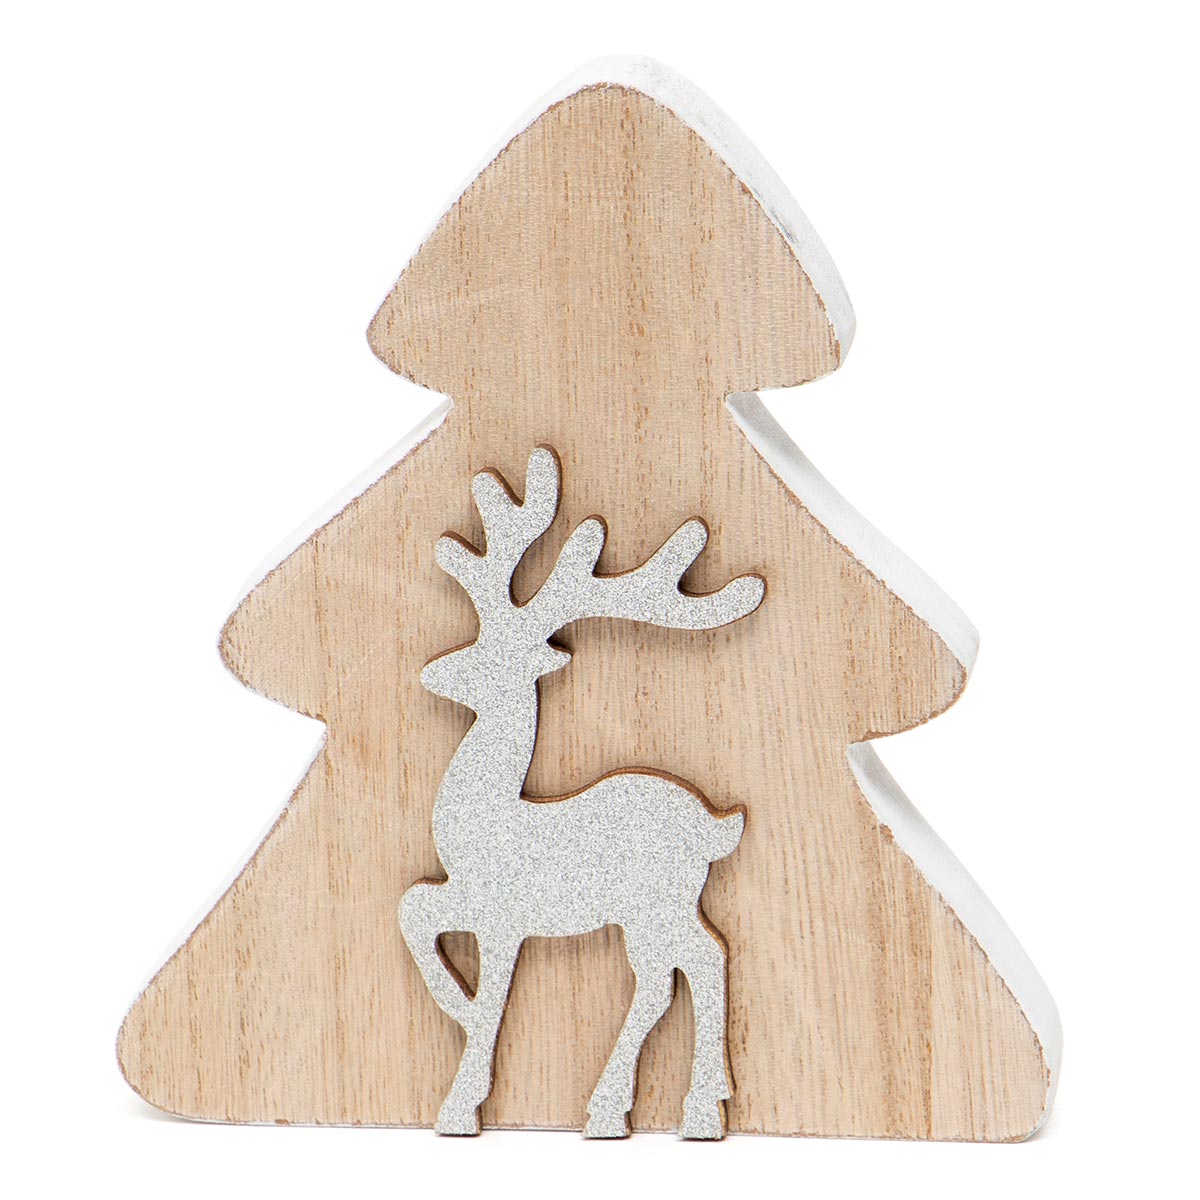 !Tree/Deer Wood Shelf Sitter Natural/White/Silver Glitter f33